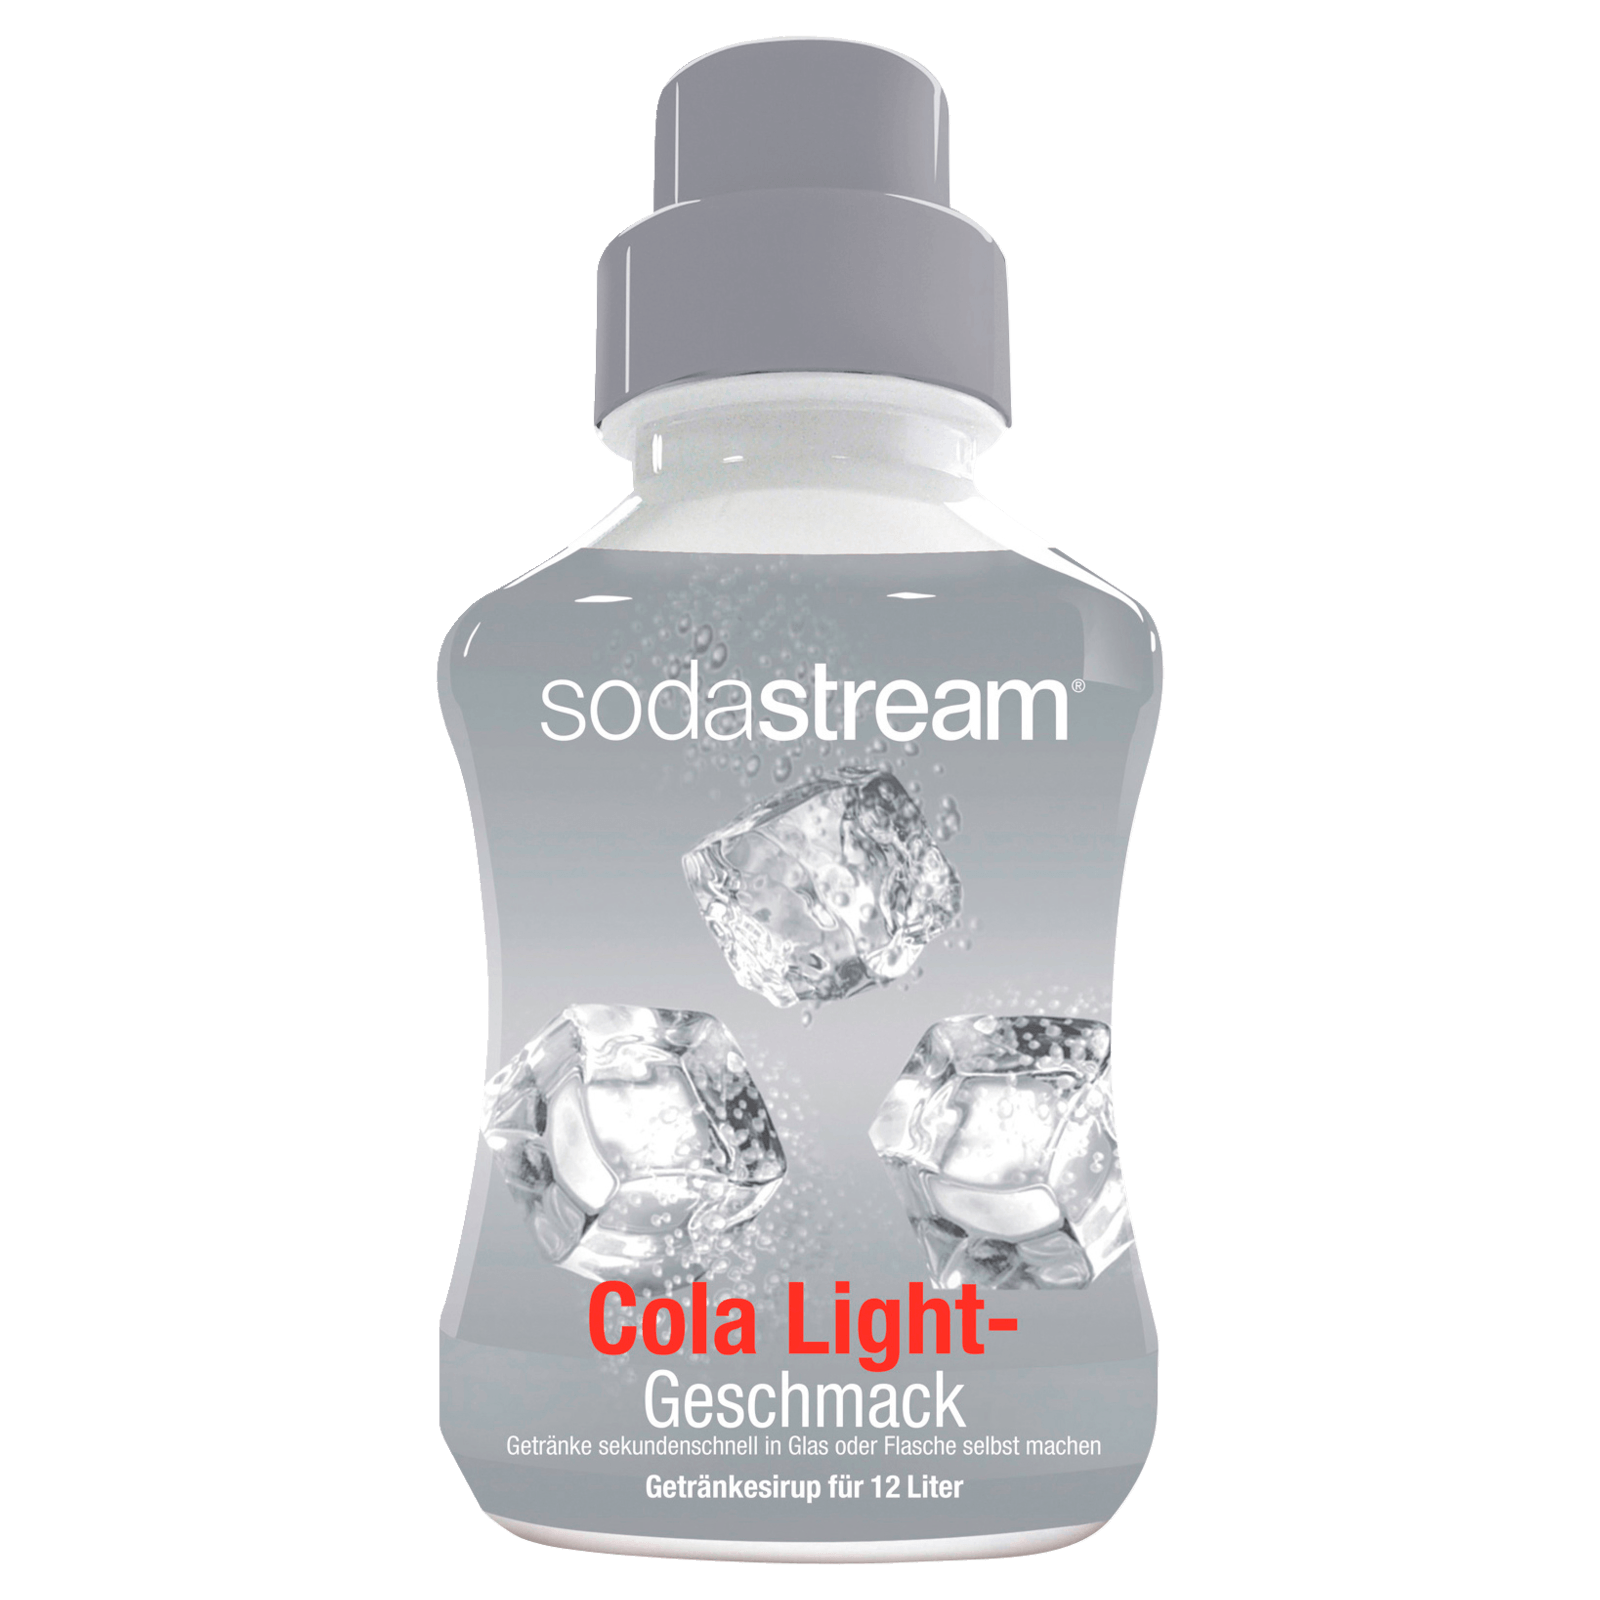 Porto motor Cusco SodaStream Cola Light-Geschmack Sirup 500ml bei REWE online bestellen!